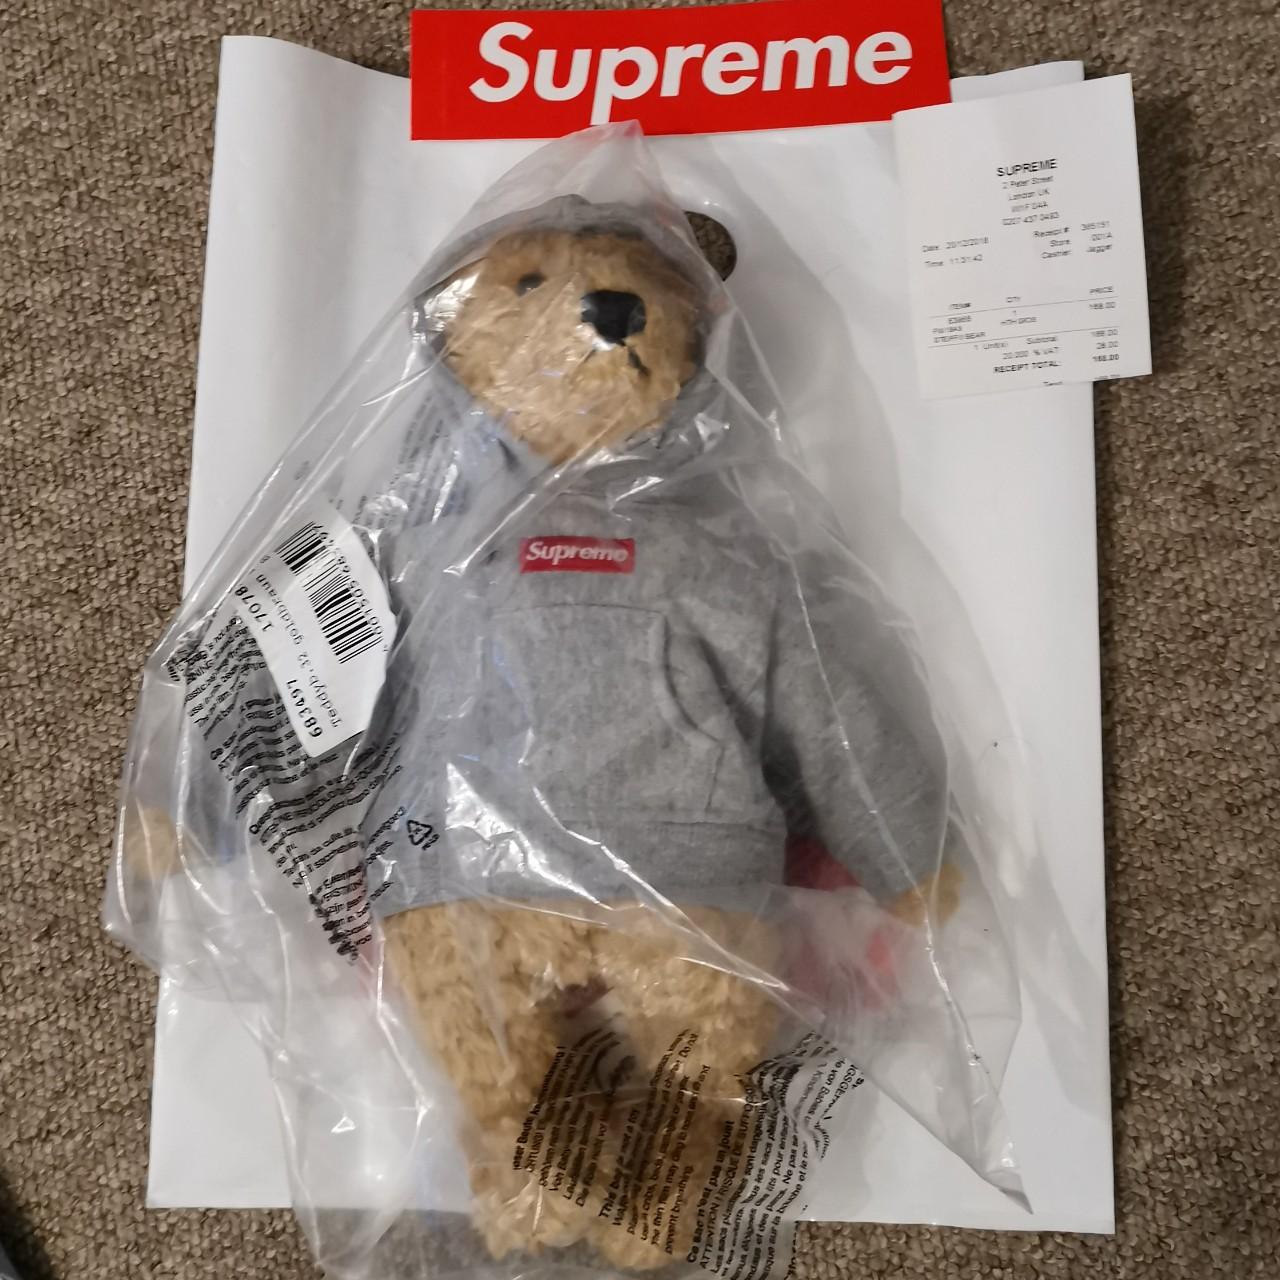 Supreme x Steiff teddybear